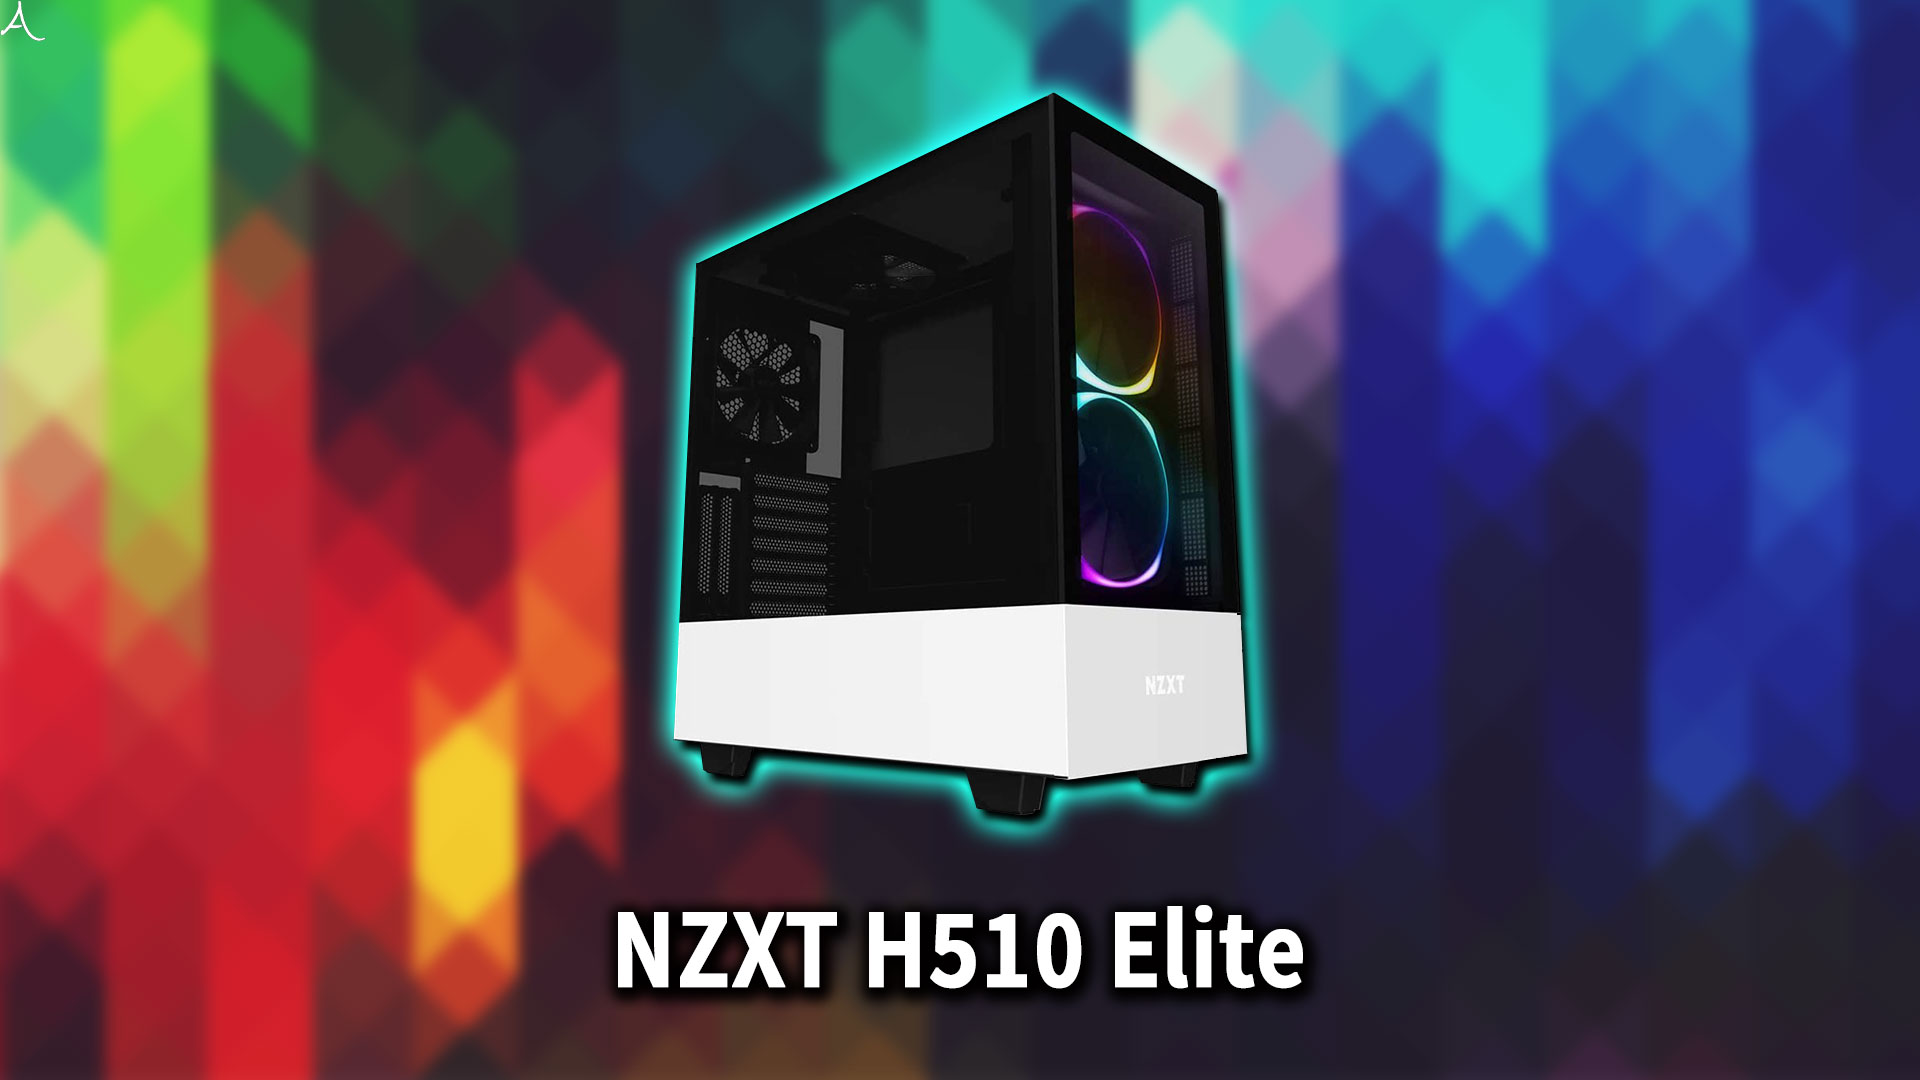 ｢NZXT H510 ELITE｣のサイズ・大きさはどれくらい？